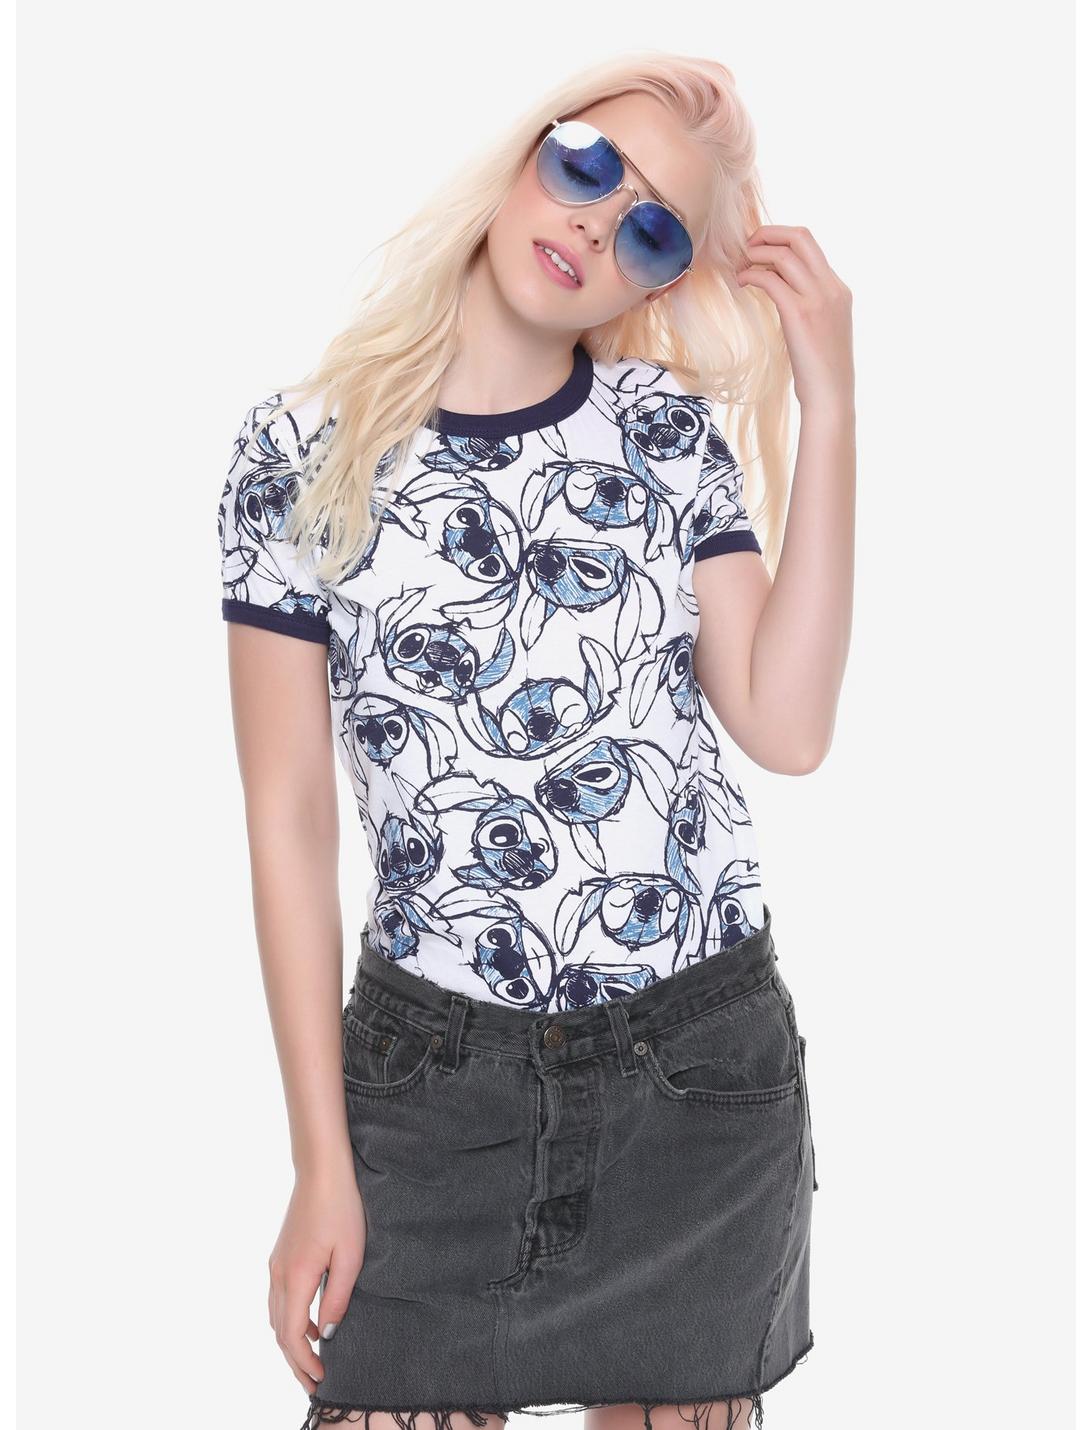 Disney Lilo & Stitch Allover Sketch Girls Ringer T-Shirt, BLUE, hi-res